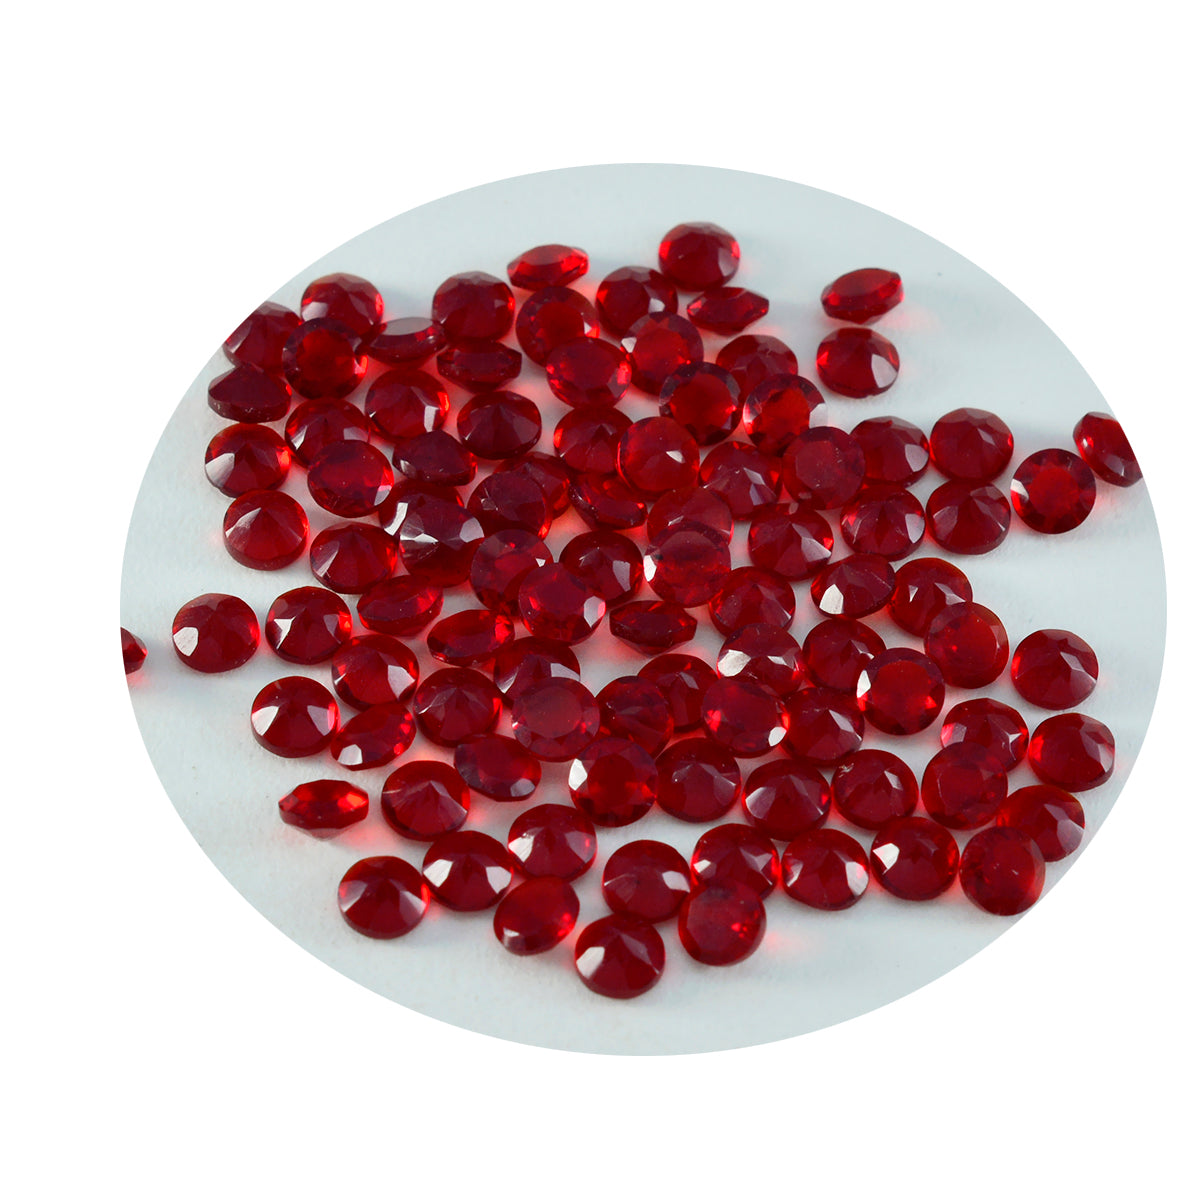 Riyogems 1PC Red Ruby CZ Faceted 3x3 mm Round Shape A+ Quality Gems